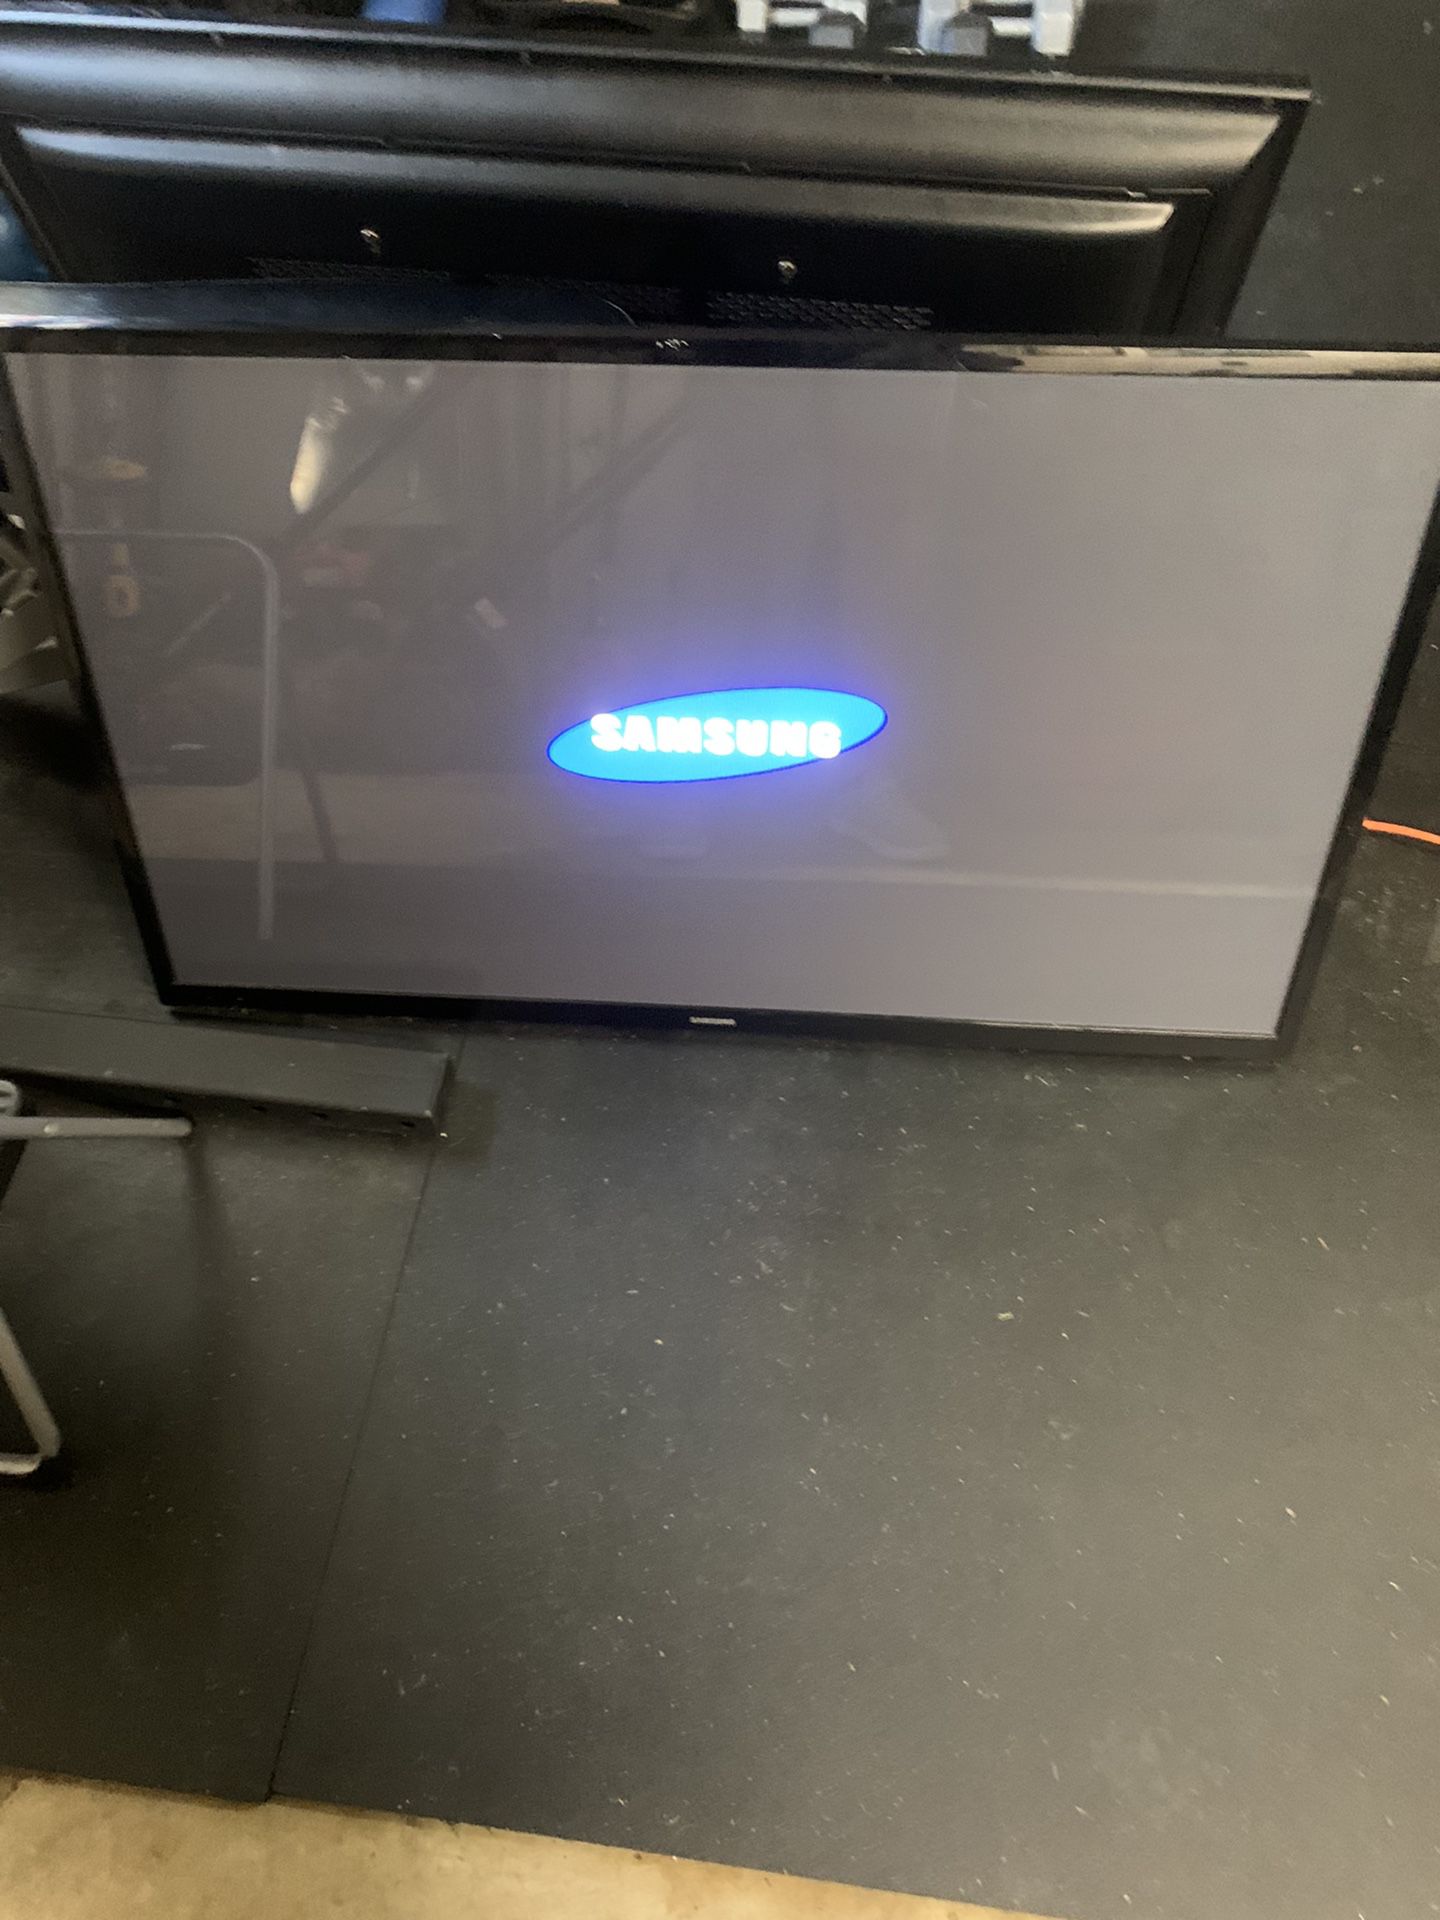 Samsung 51” plasma flat screen TV